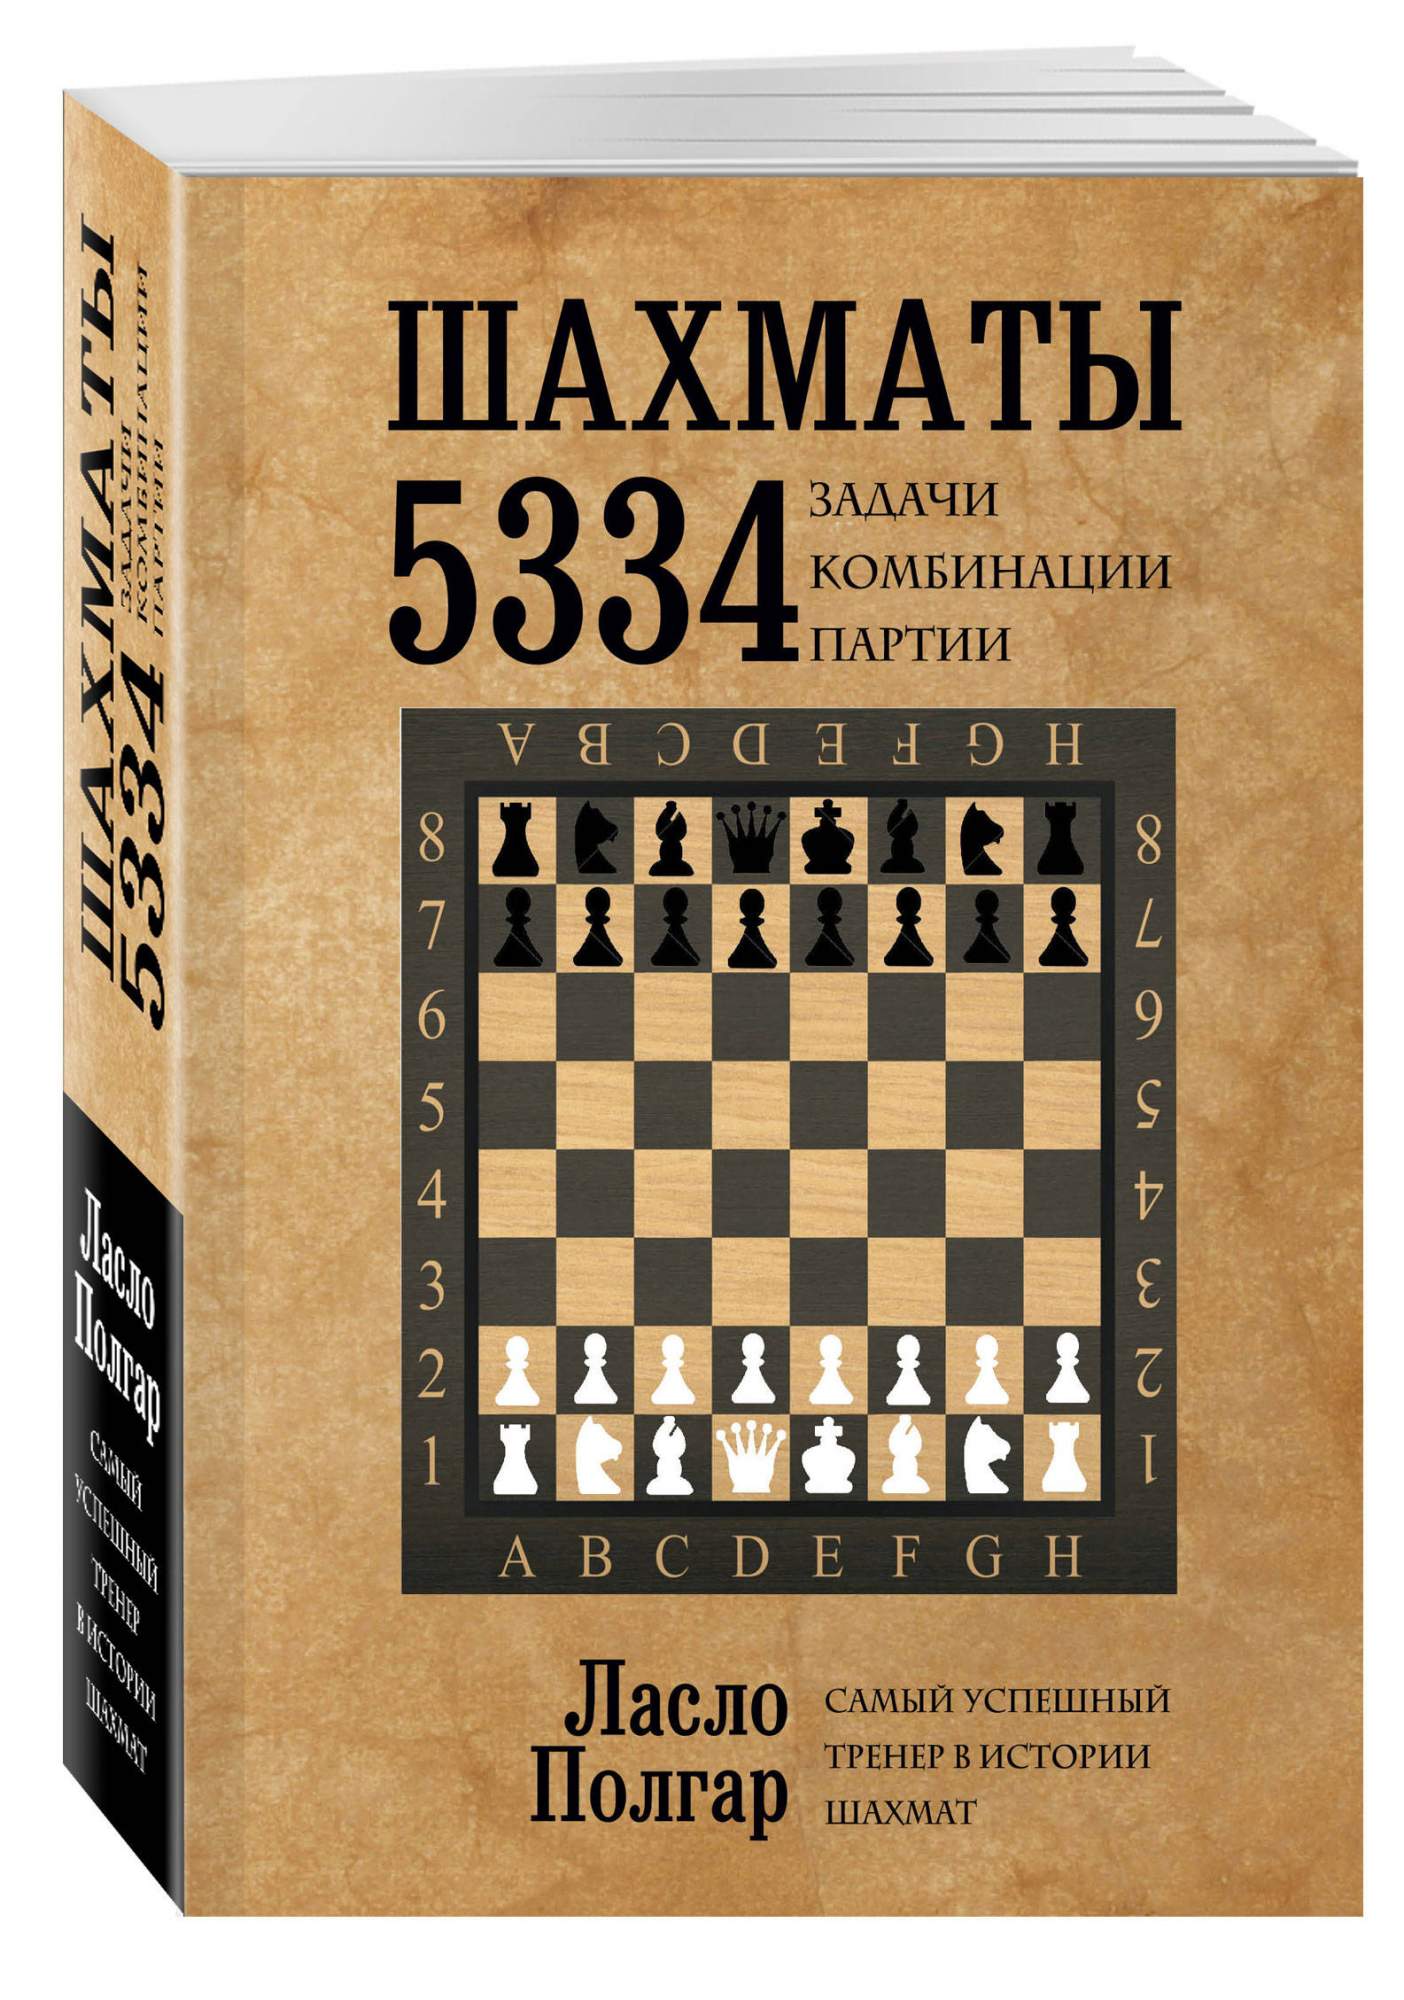 Шахматы, 5334 Задачи, комбинации и партии